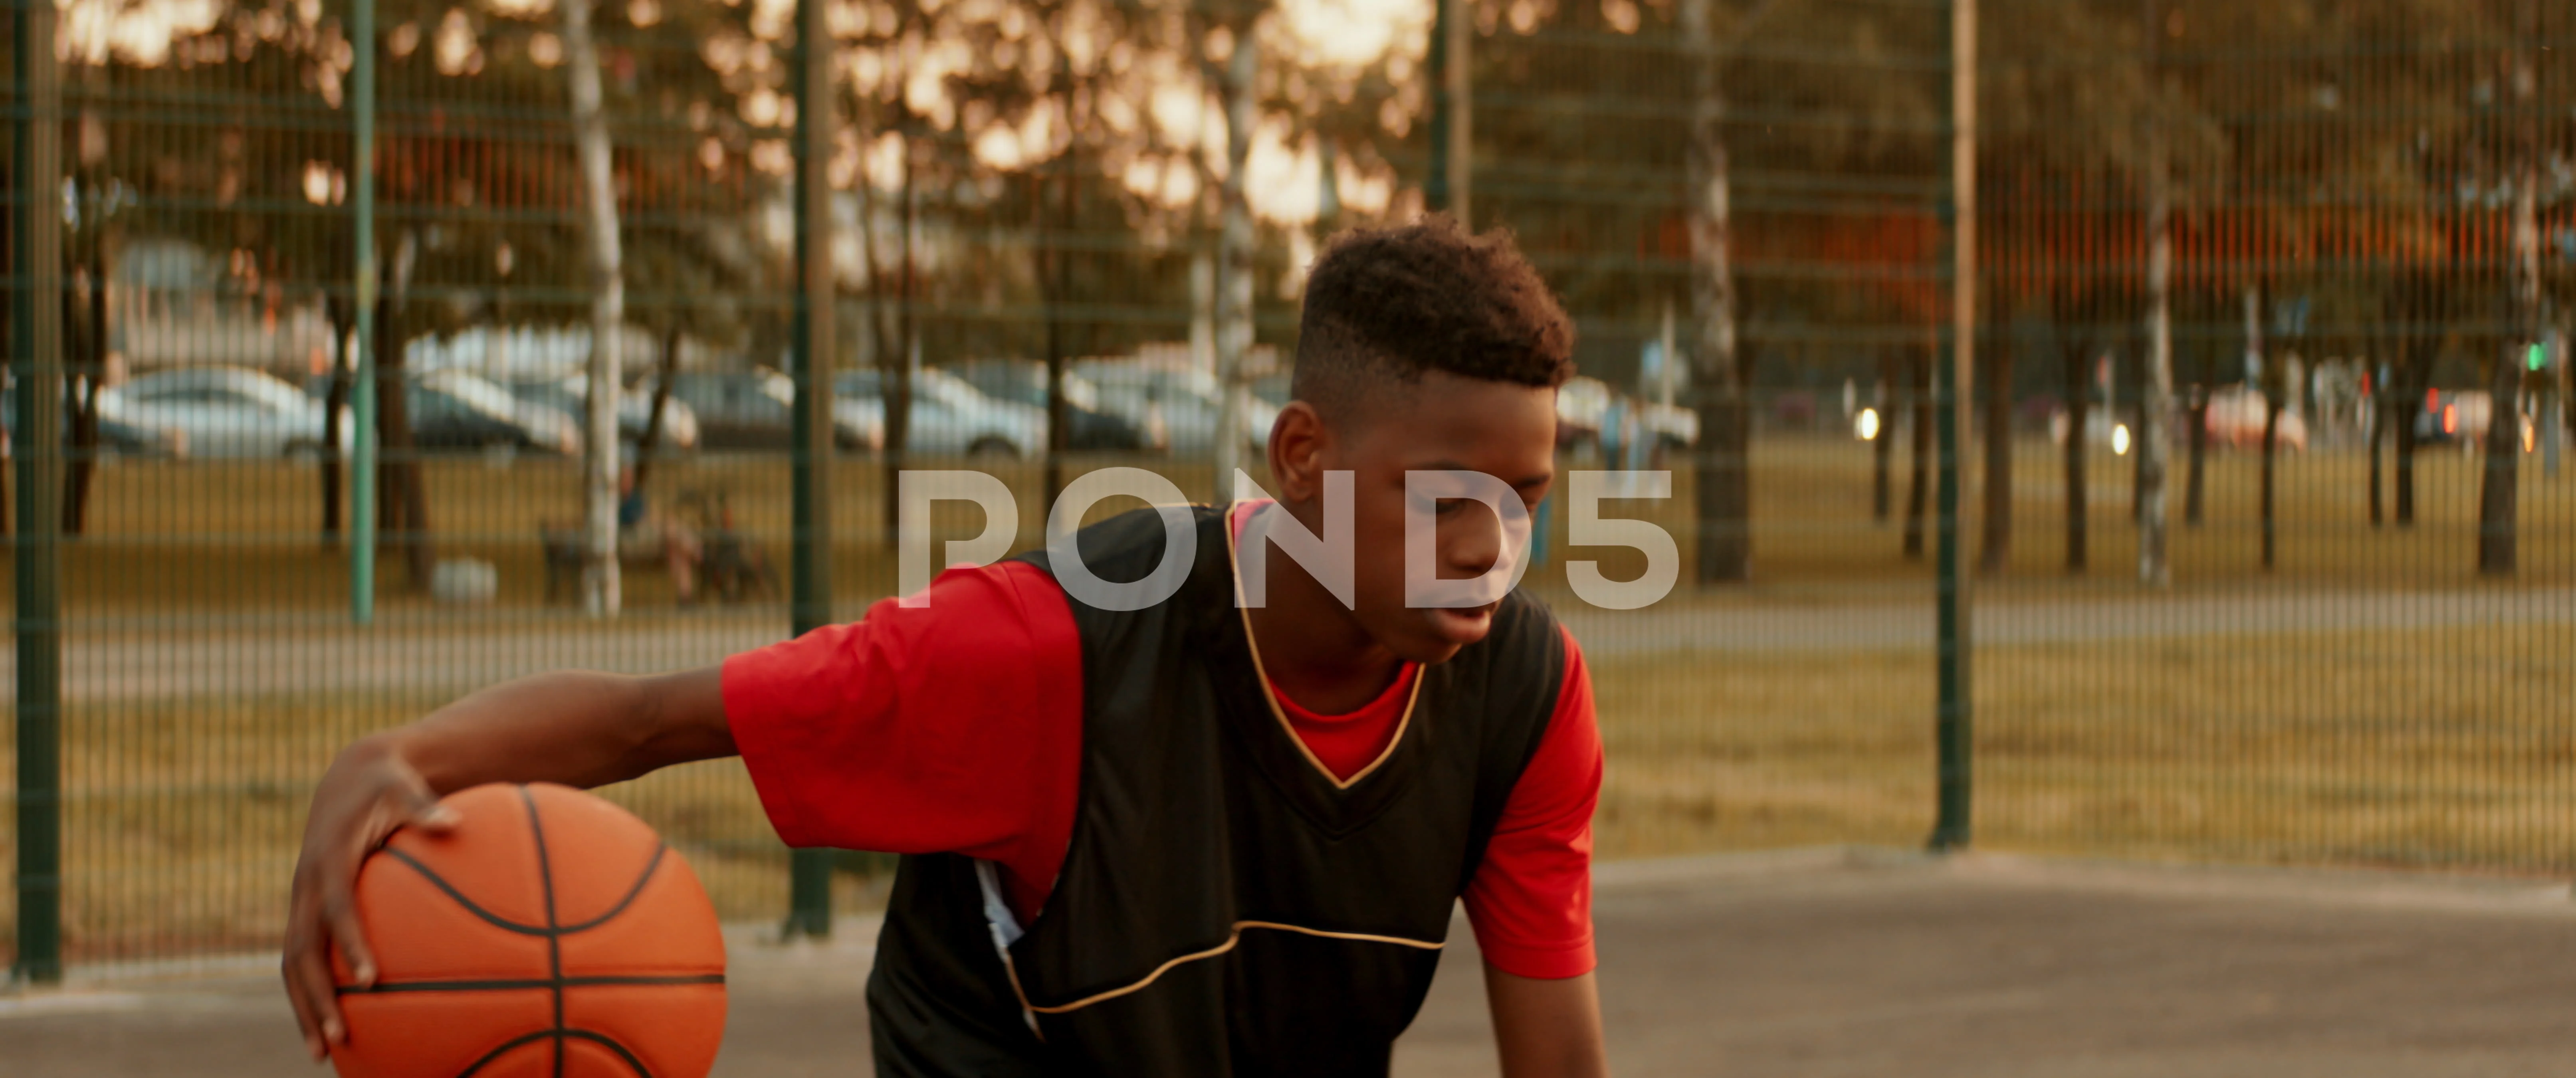 black child playing basketball